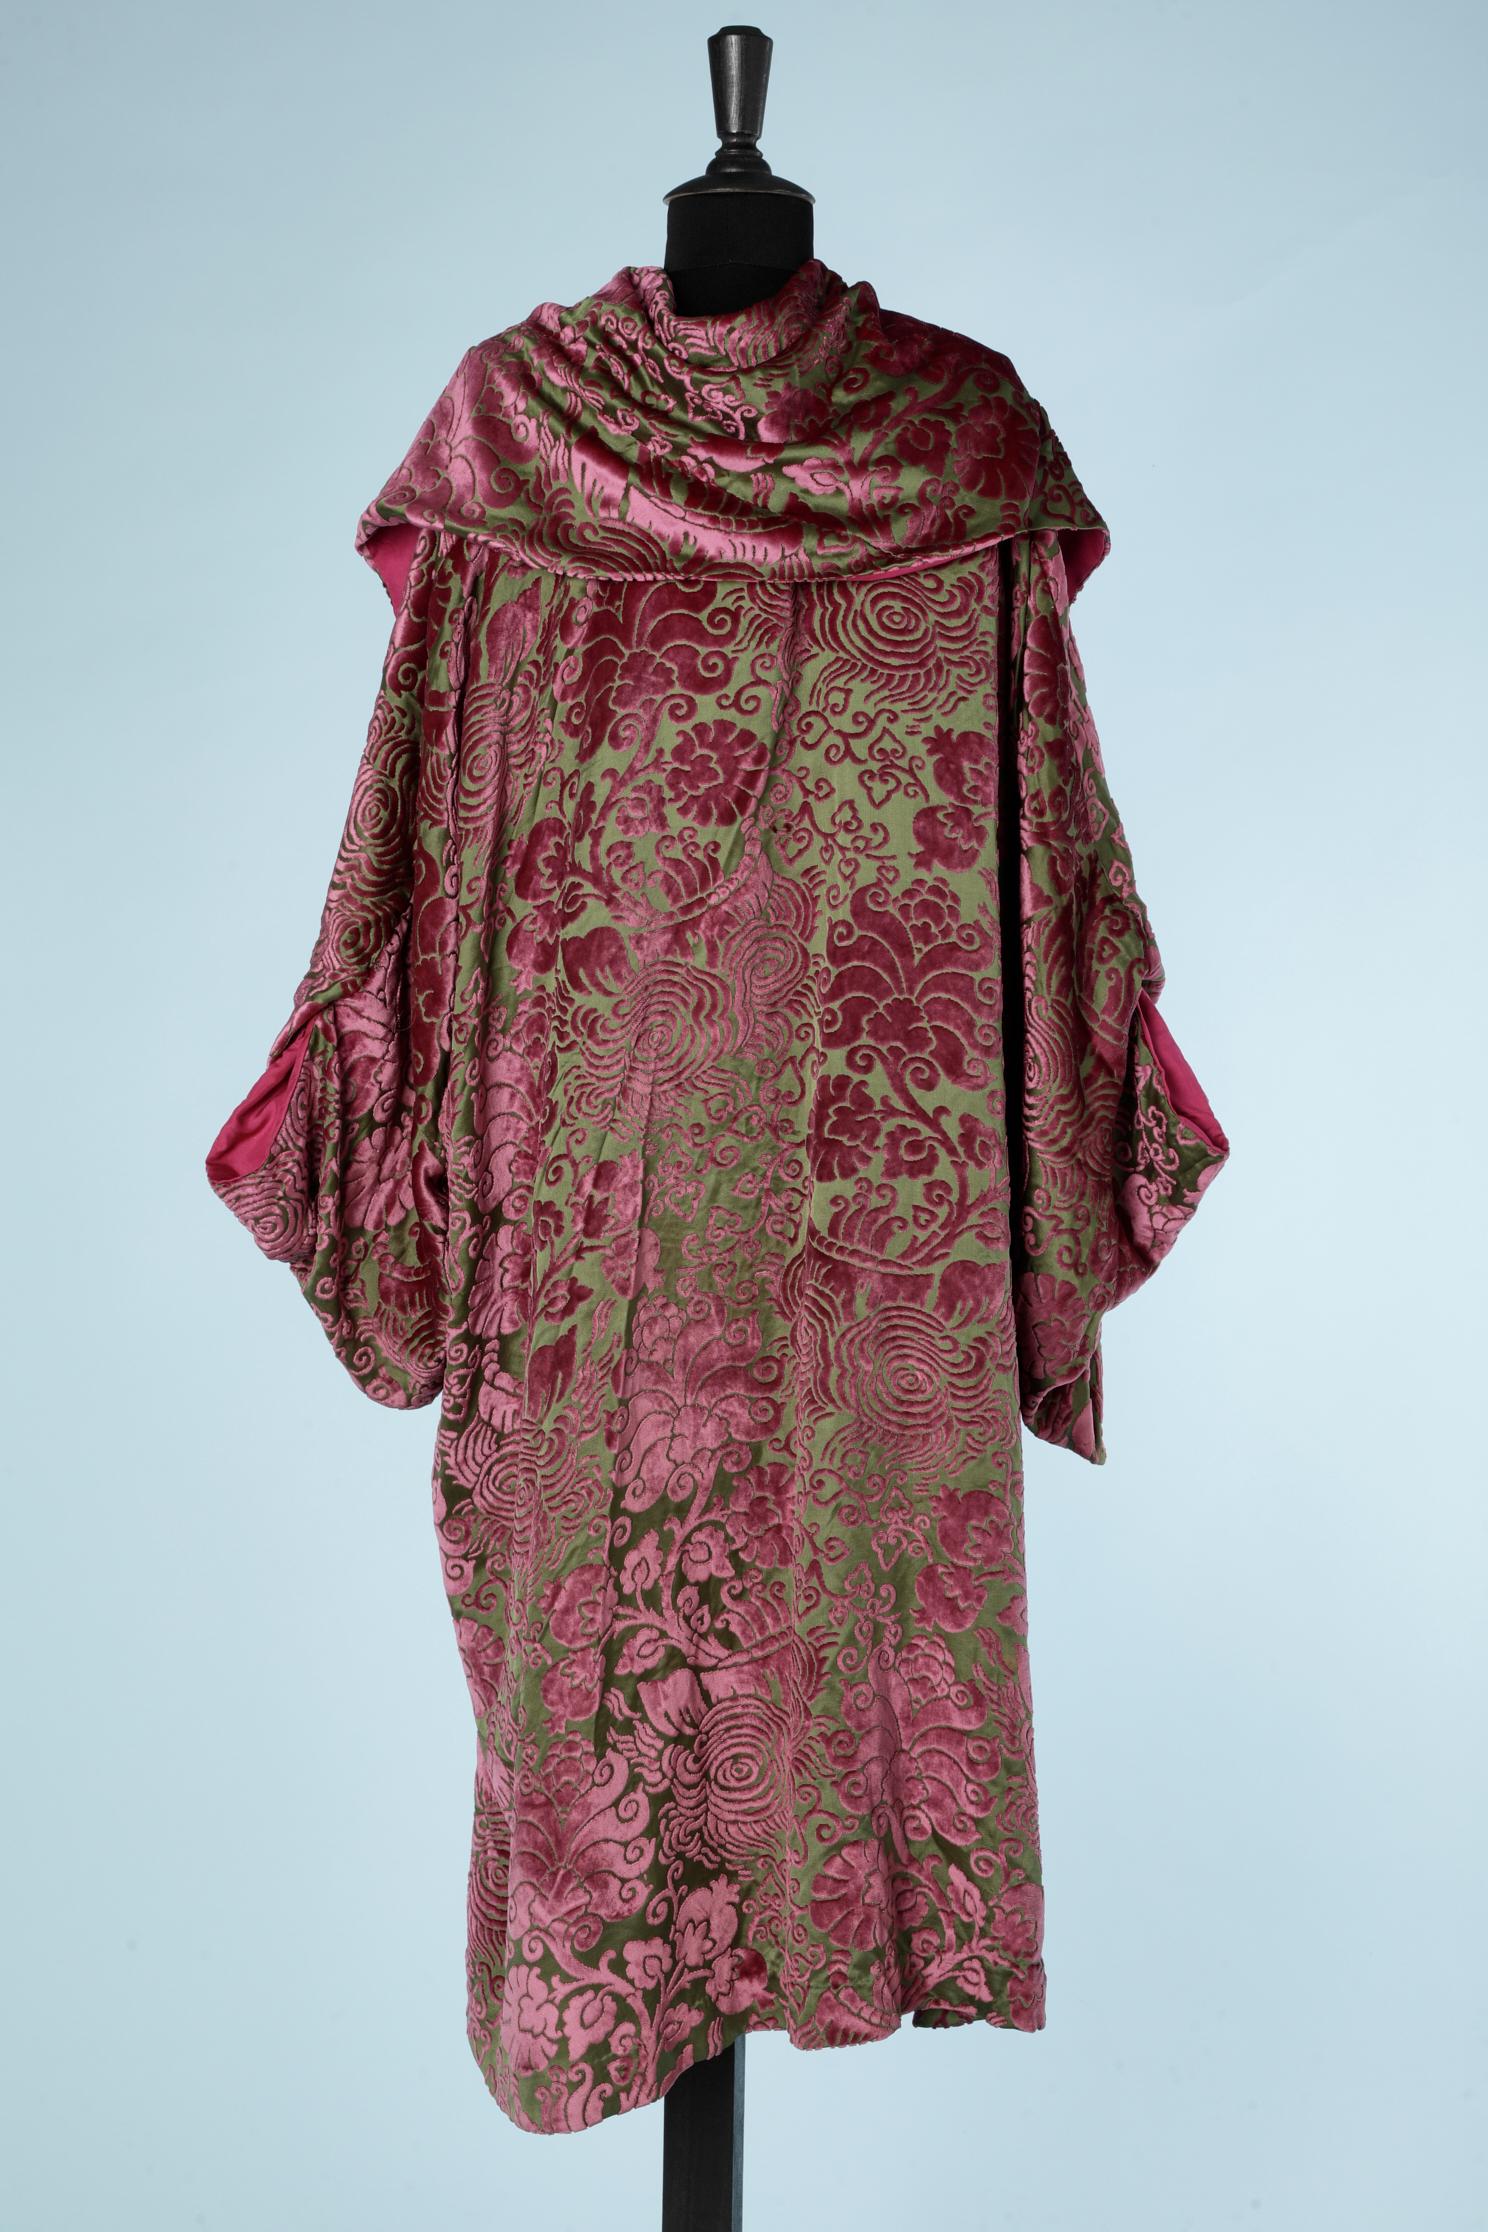 Women's Opera coat in purple damask velvet on green silk satin base Circa 1920